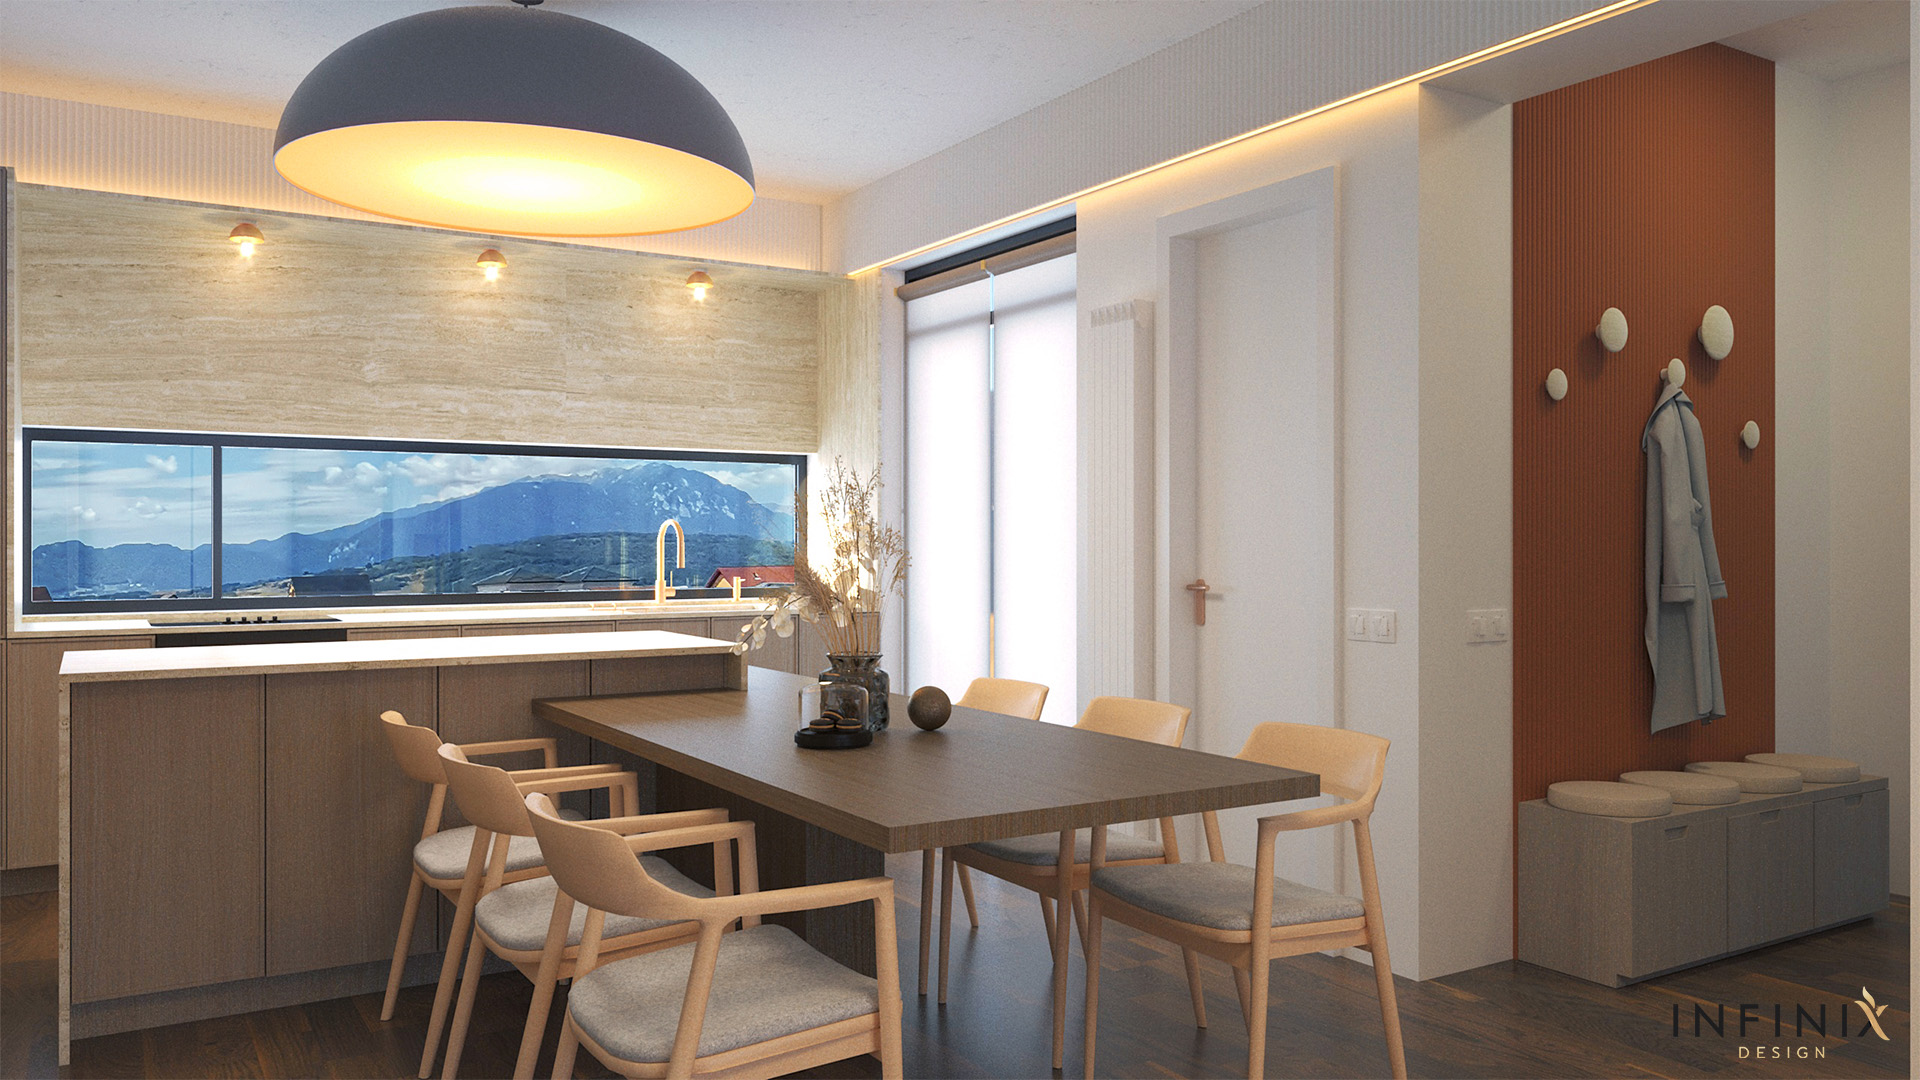 016.03_Infinix_design_interior_casa brasov